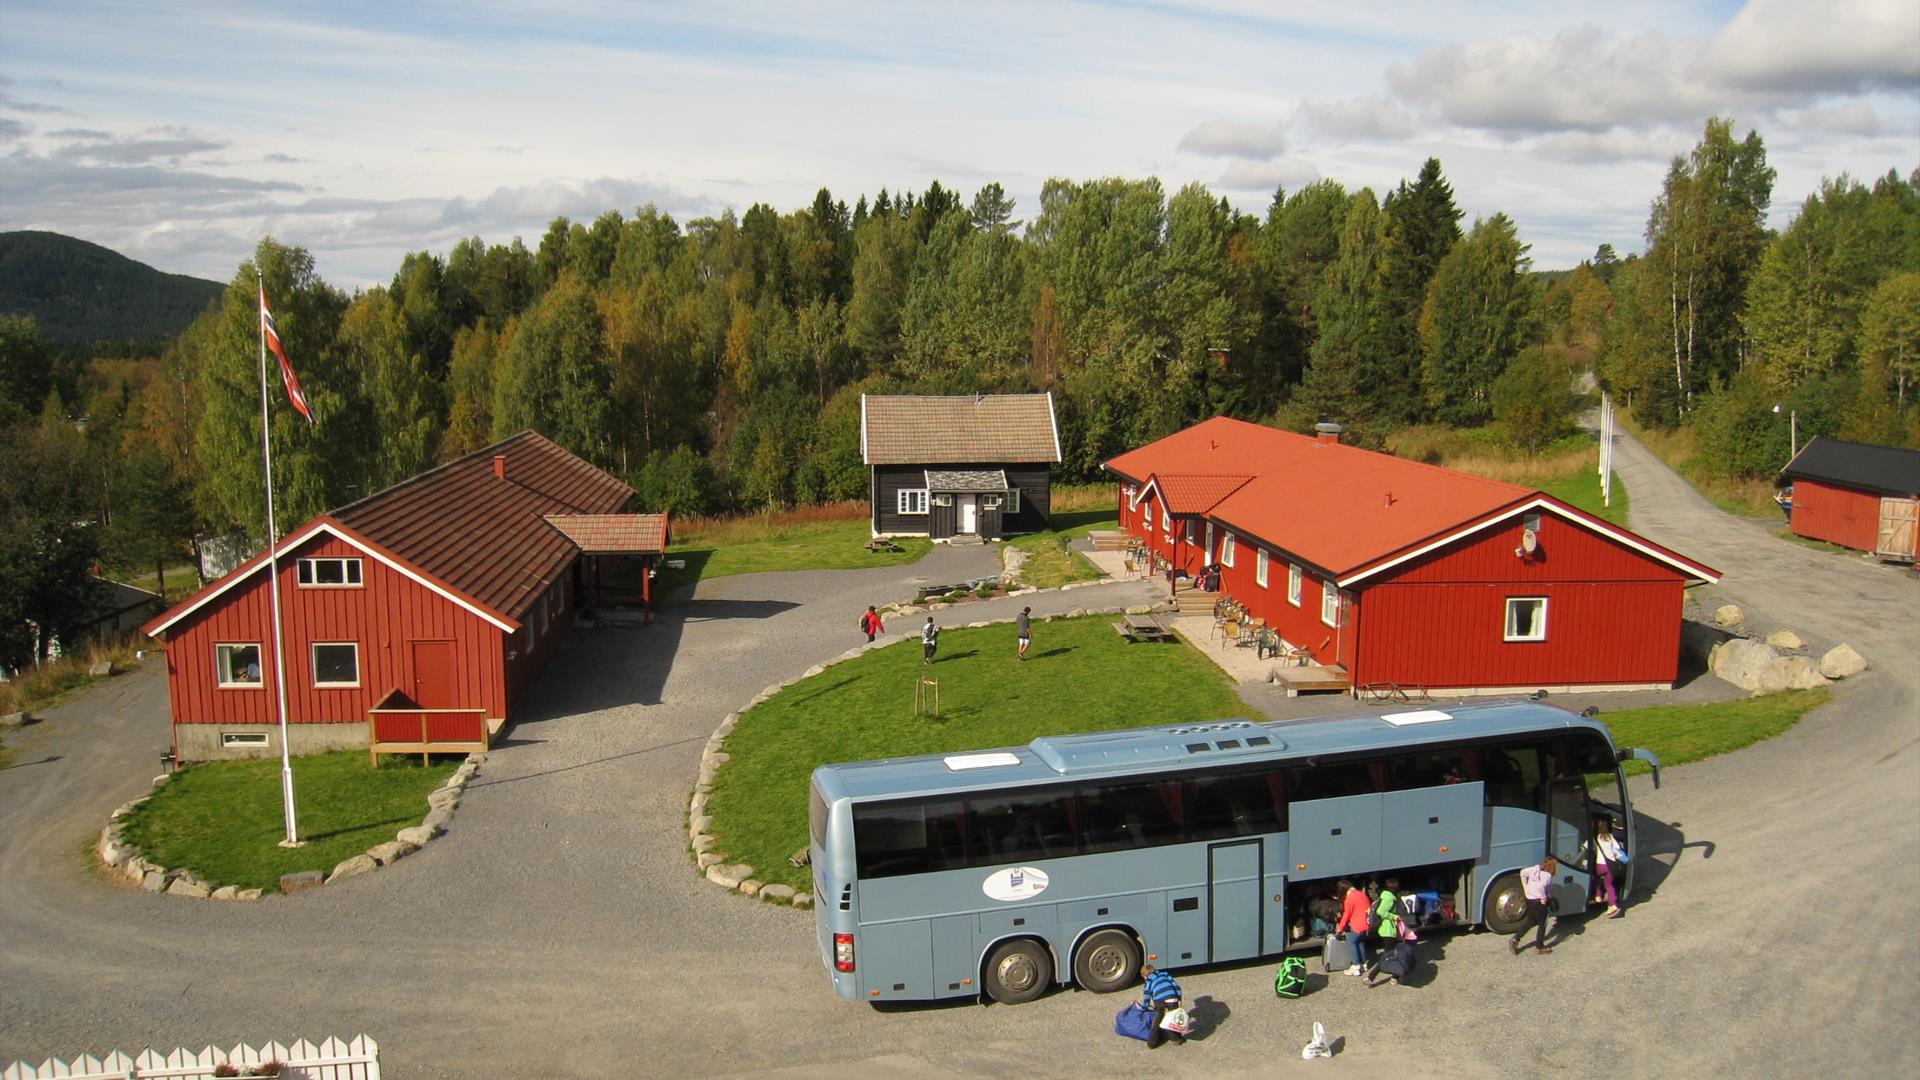 The yard at Camp Sjusjøen